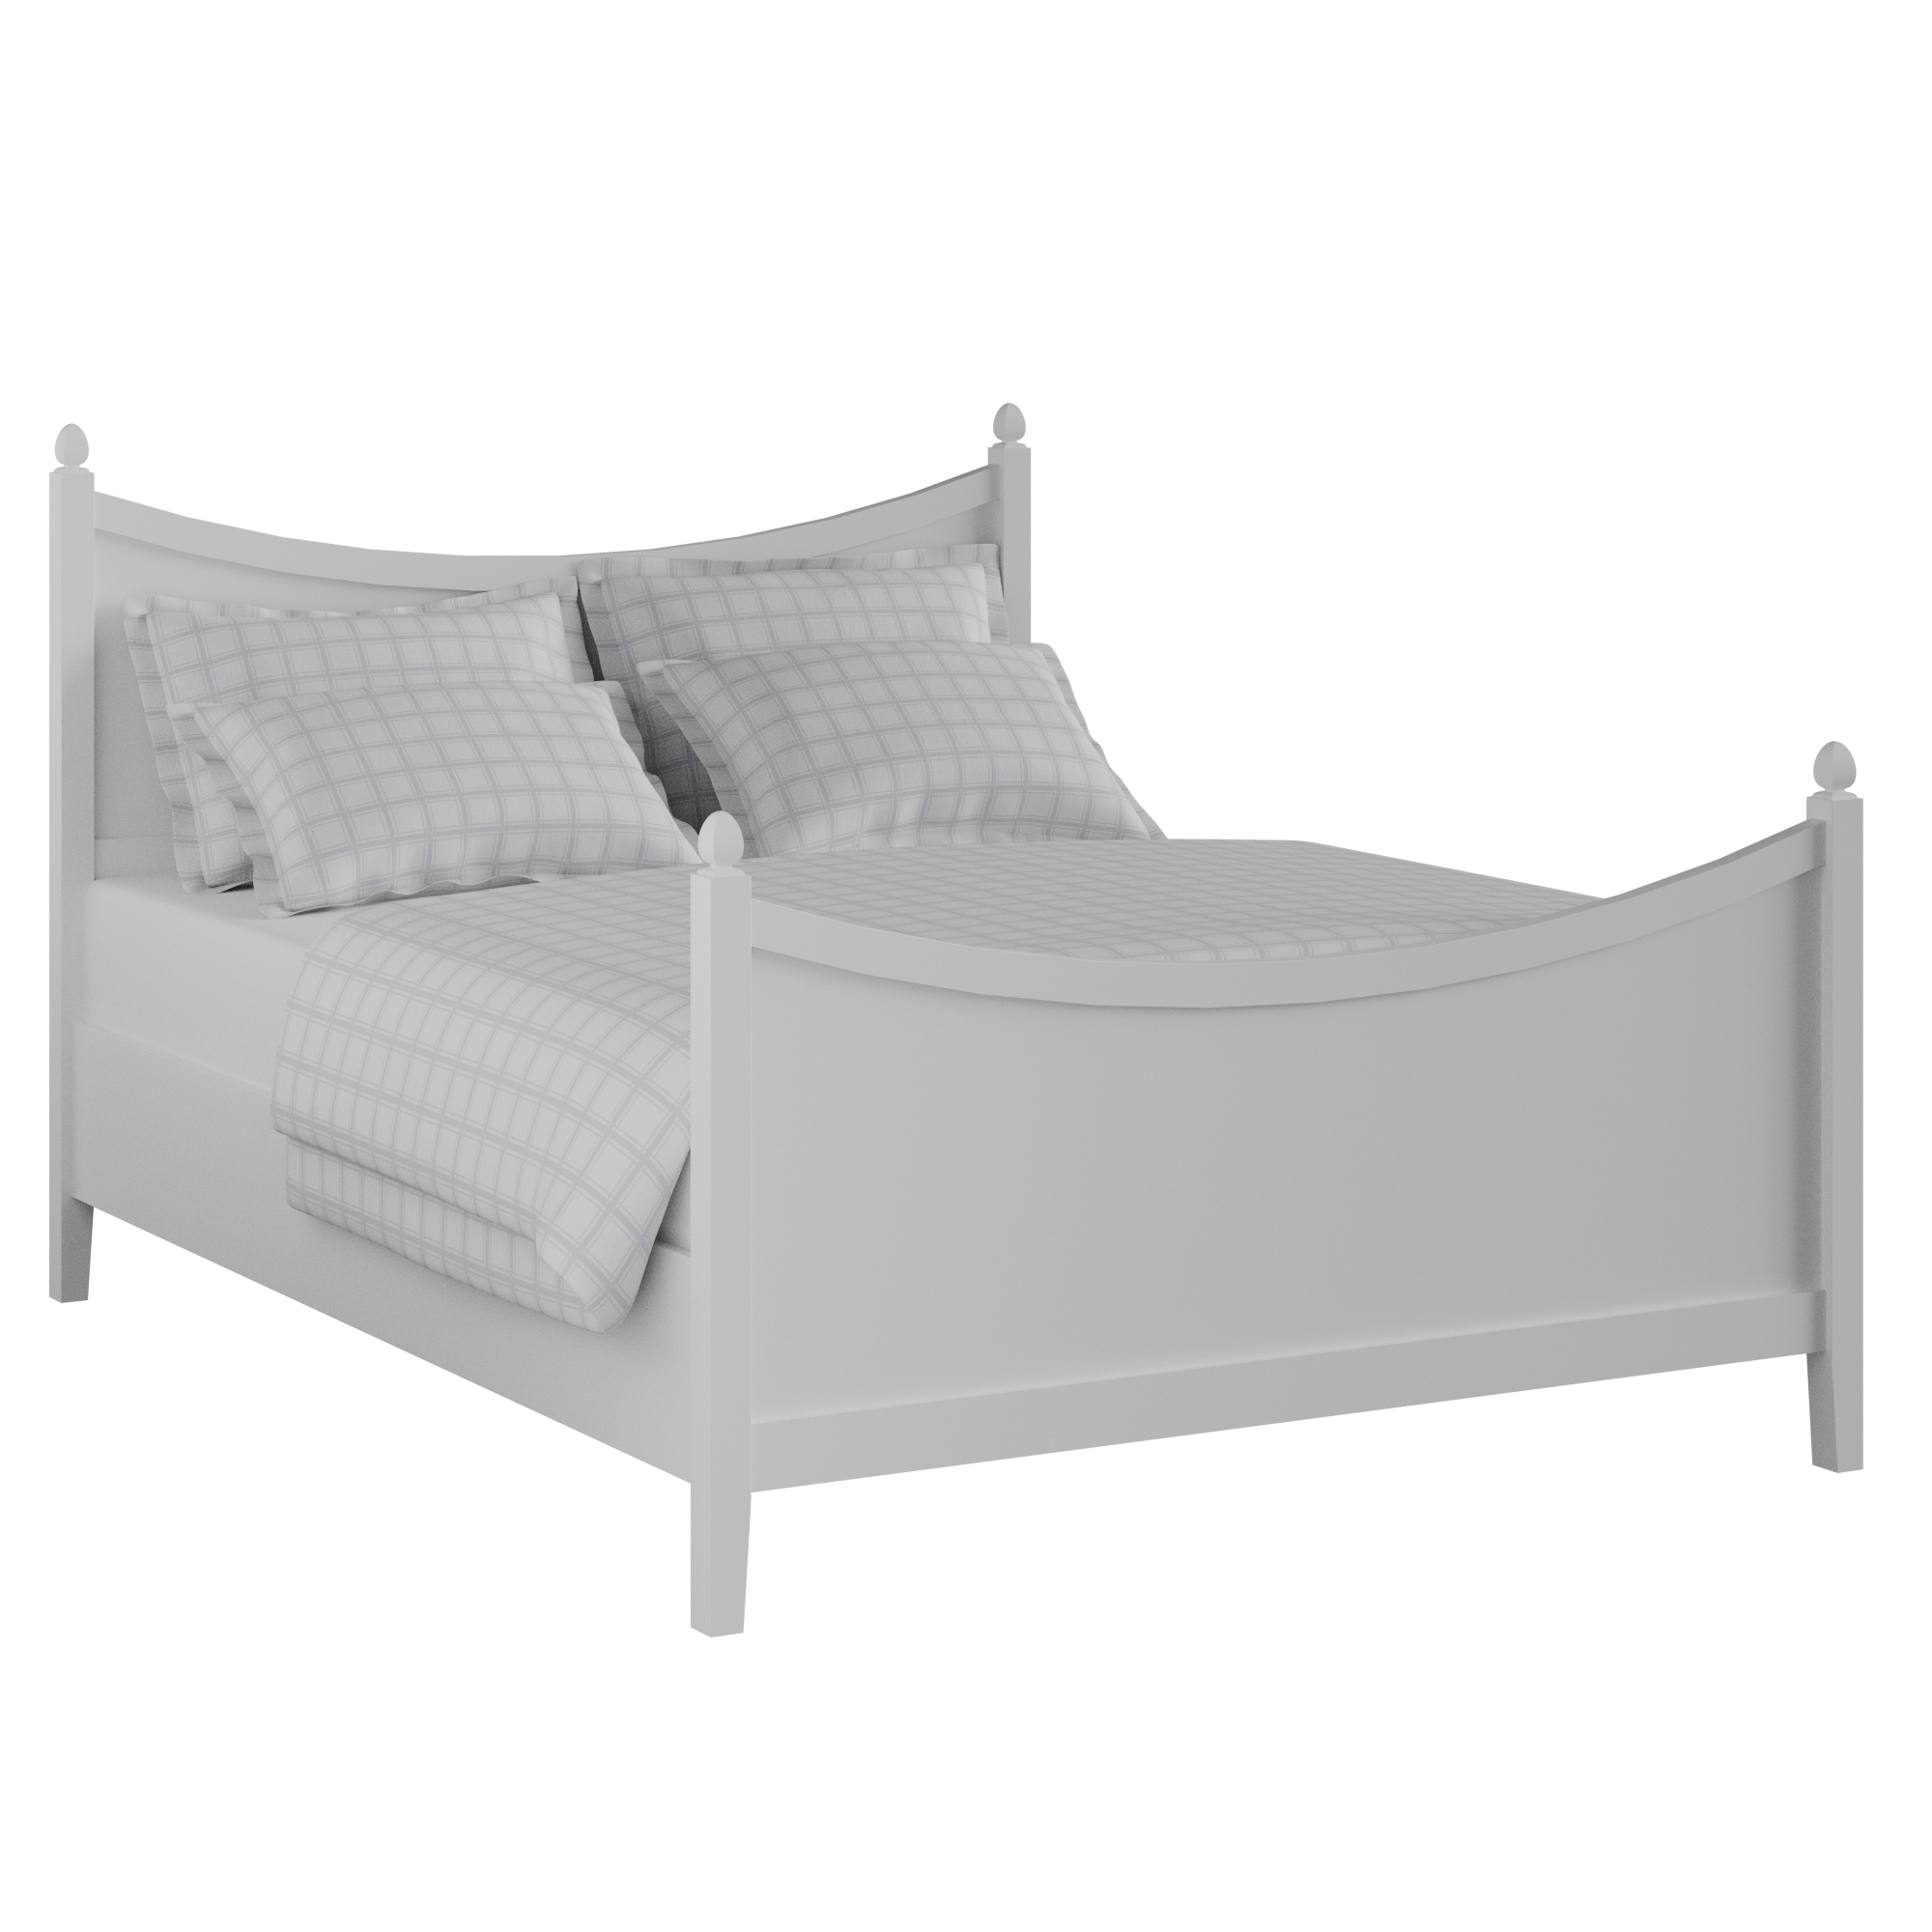 Blake Painted houten bed in wit met matras